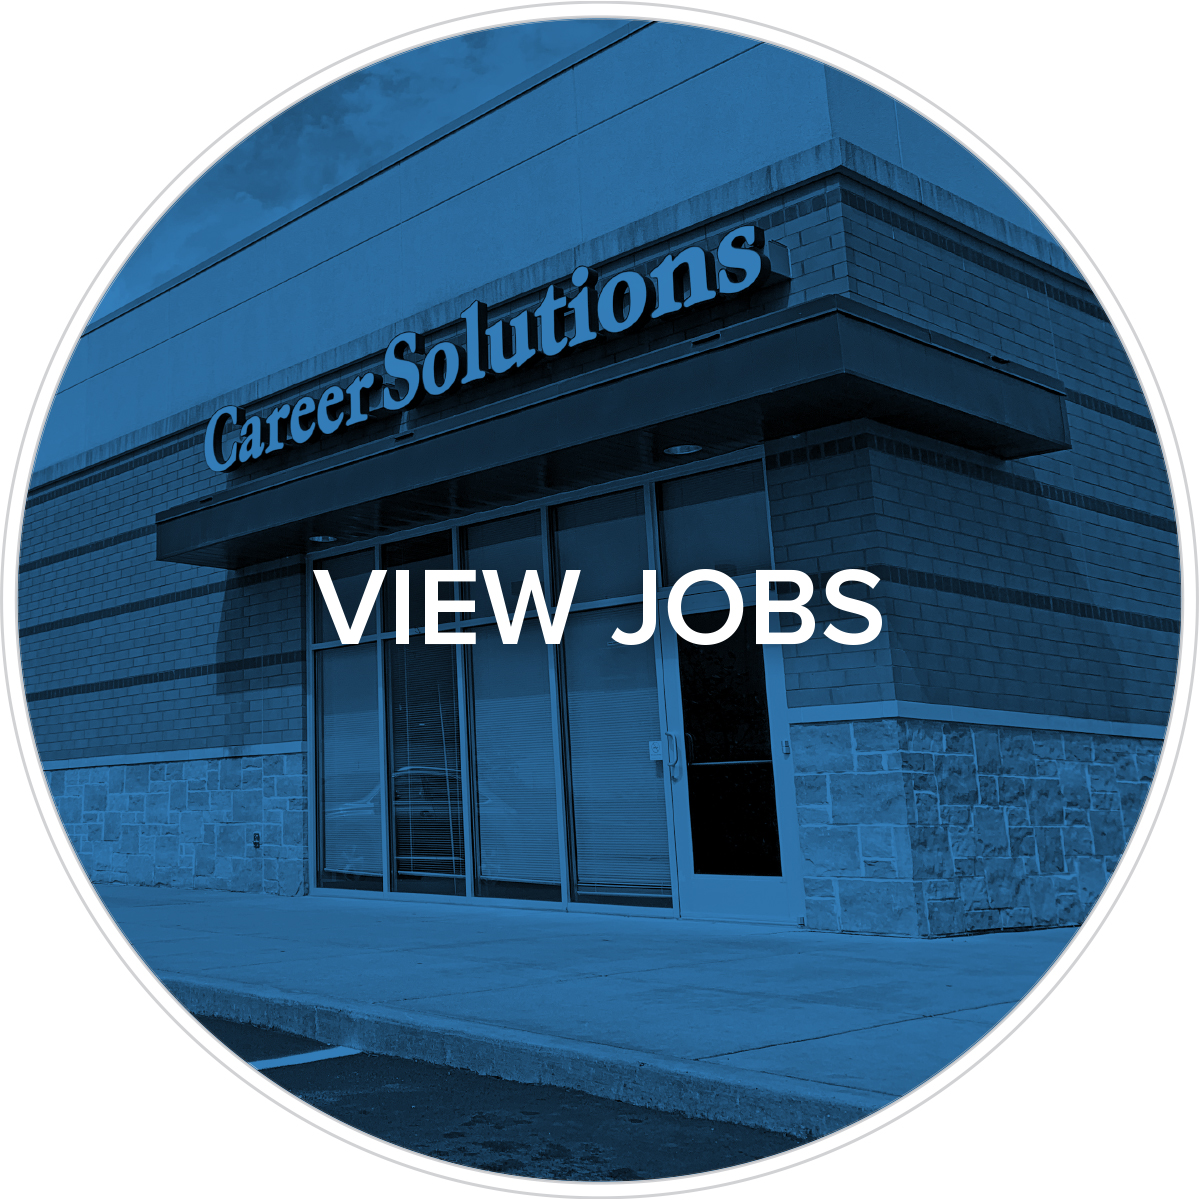 View Jobs